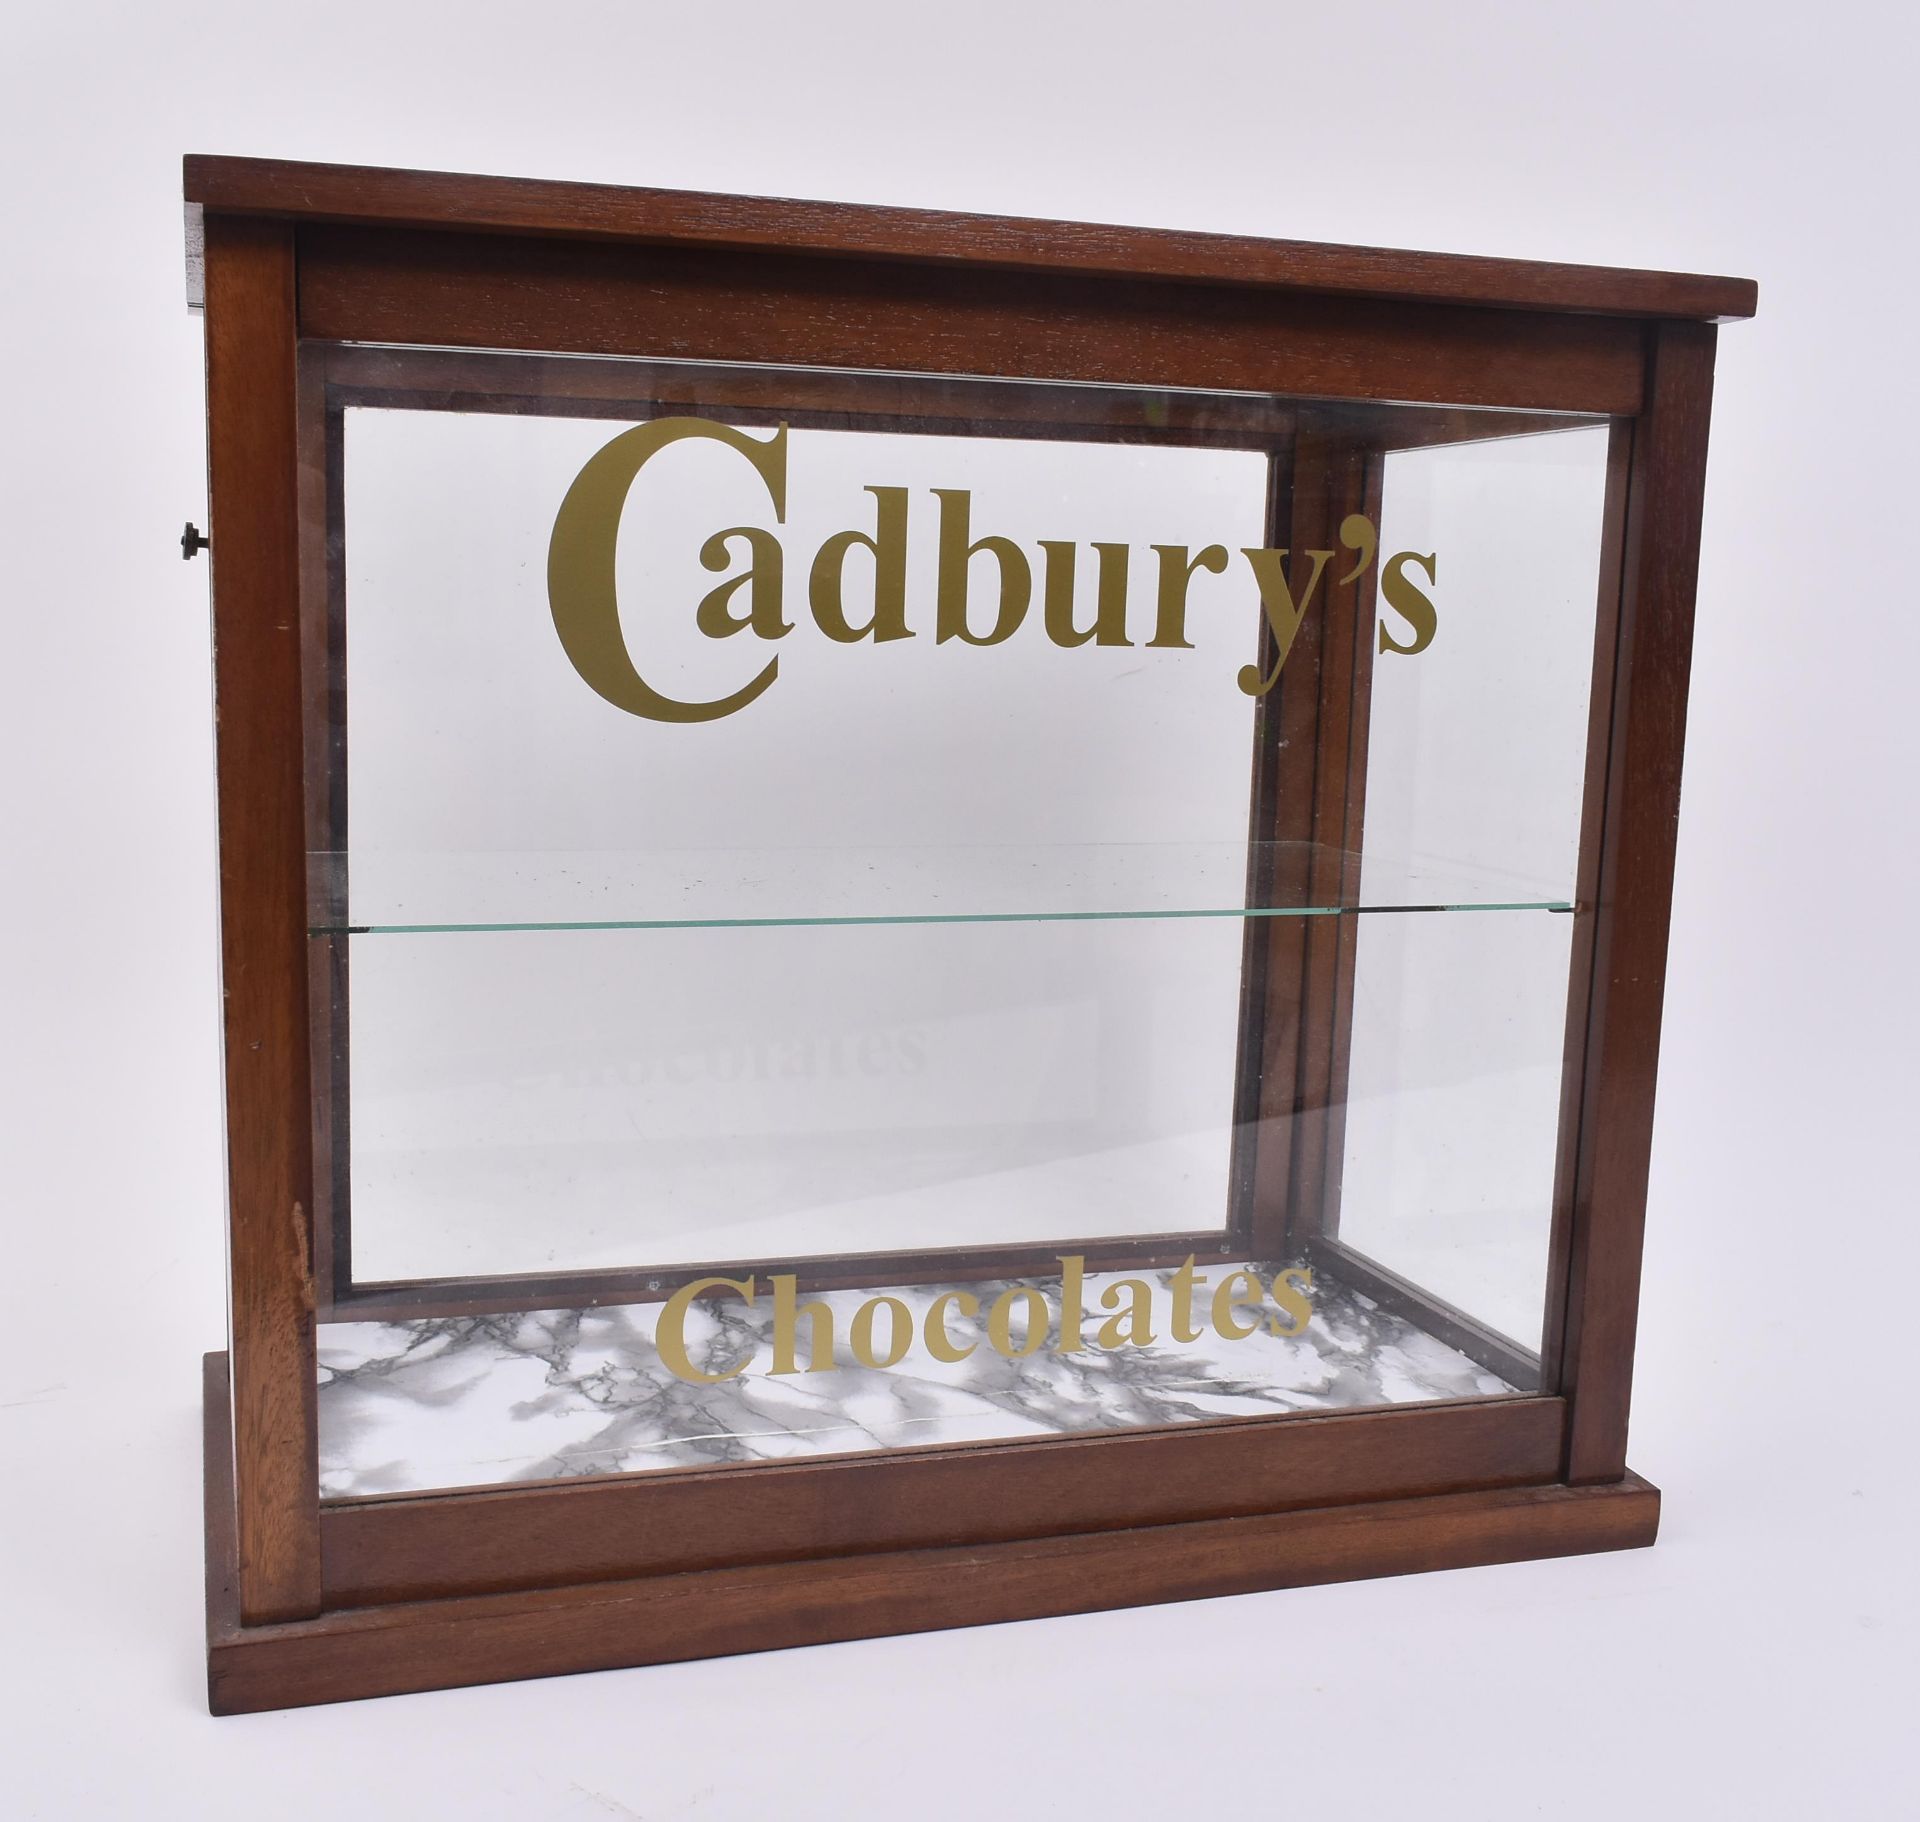 VINTAGE 20TH CENTURY OAK CASED CABINET WITH CADBURY'S LABEL